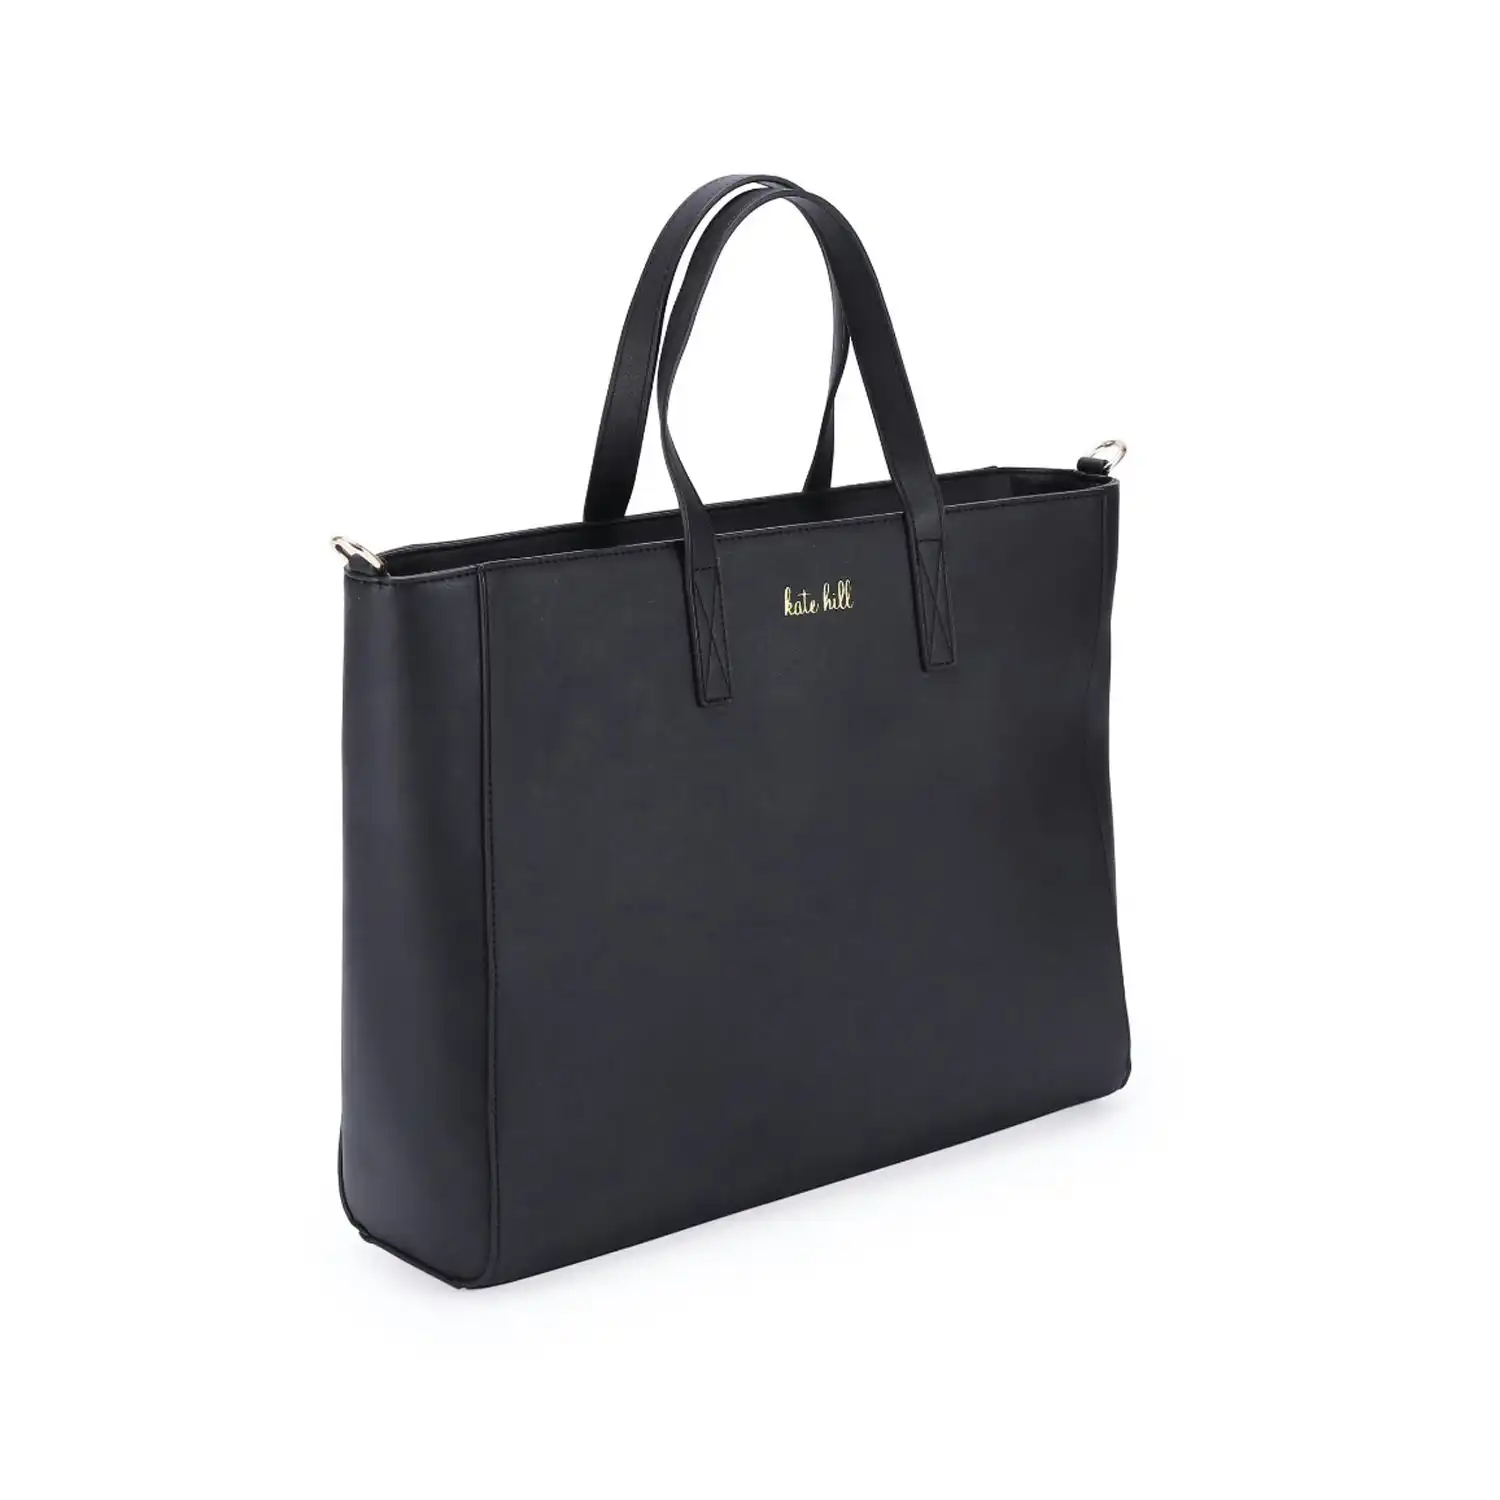 Kate Hill Bloom Travel Tote Bag w/ Attachable Shoulder Strap Black 15.5L